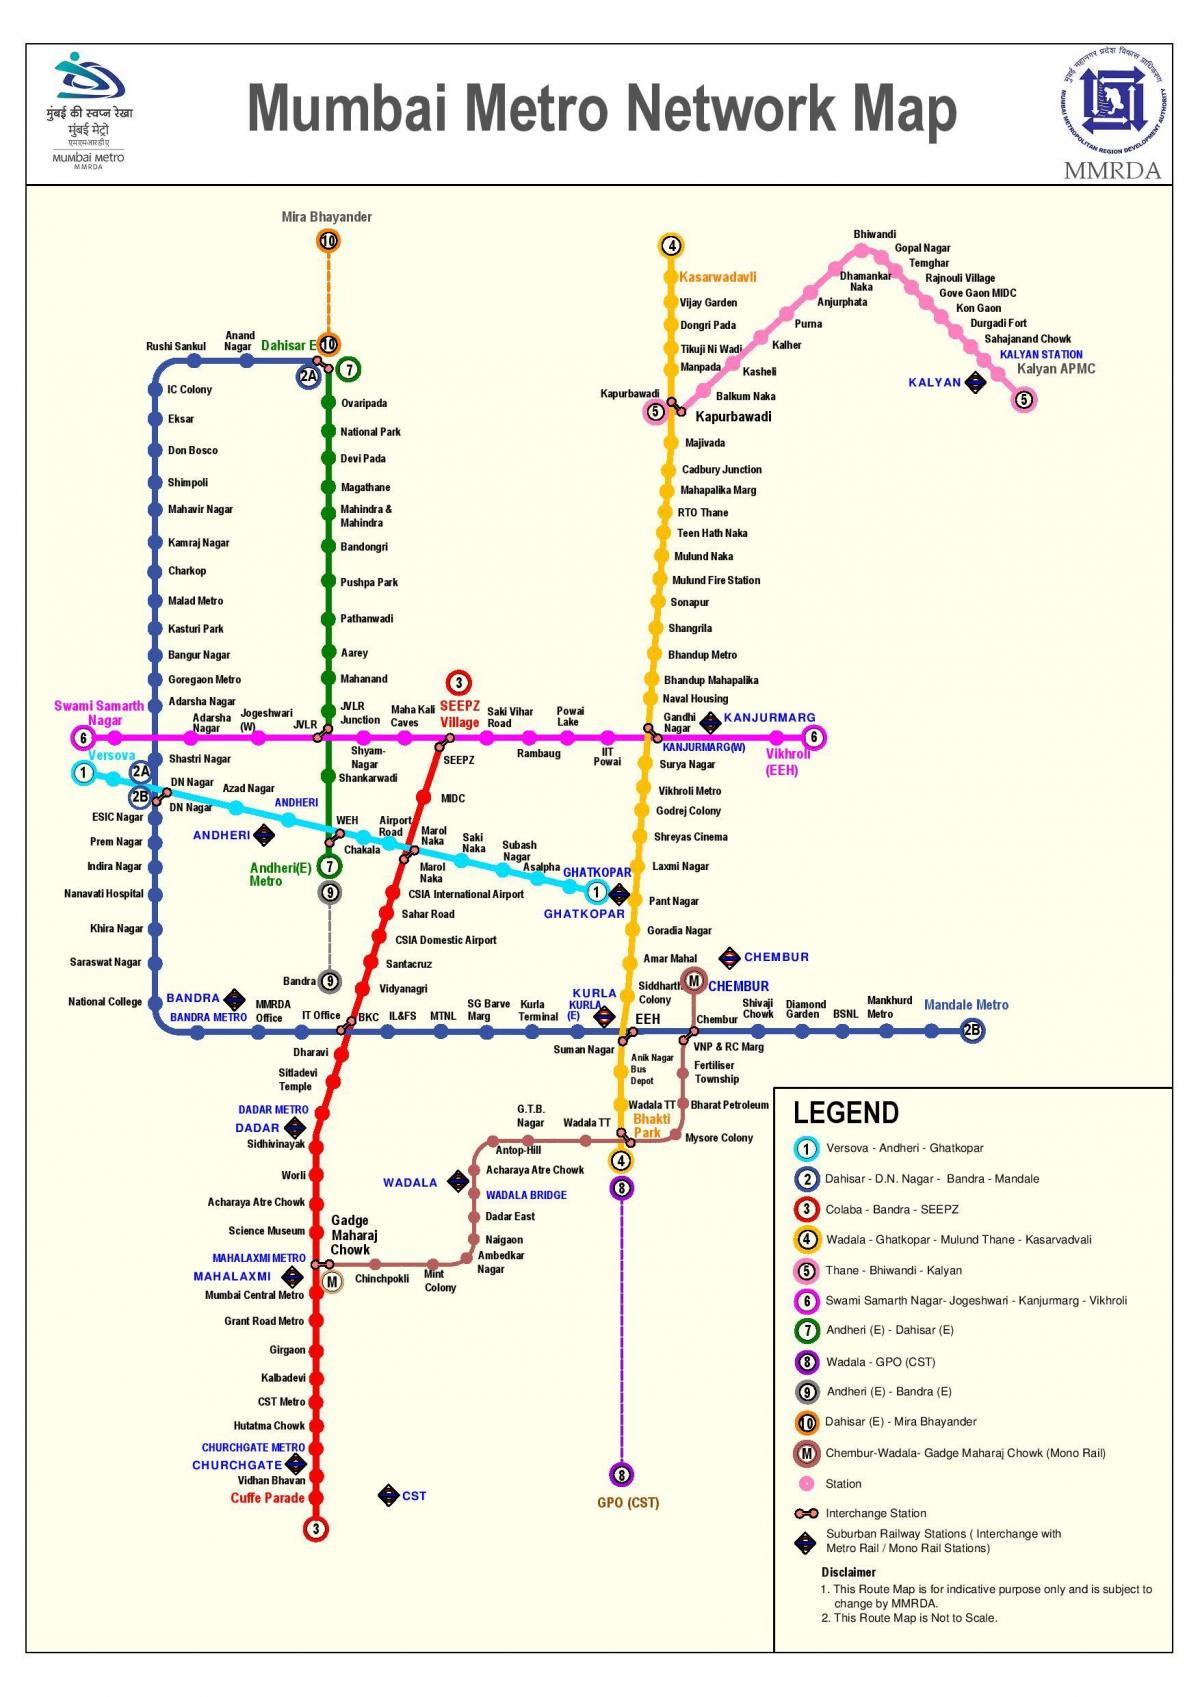 metro poti zemljevid Mumbaju